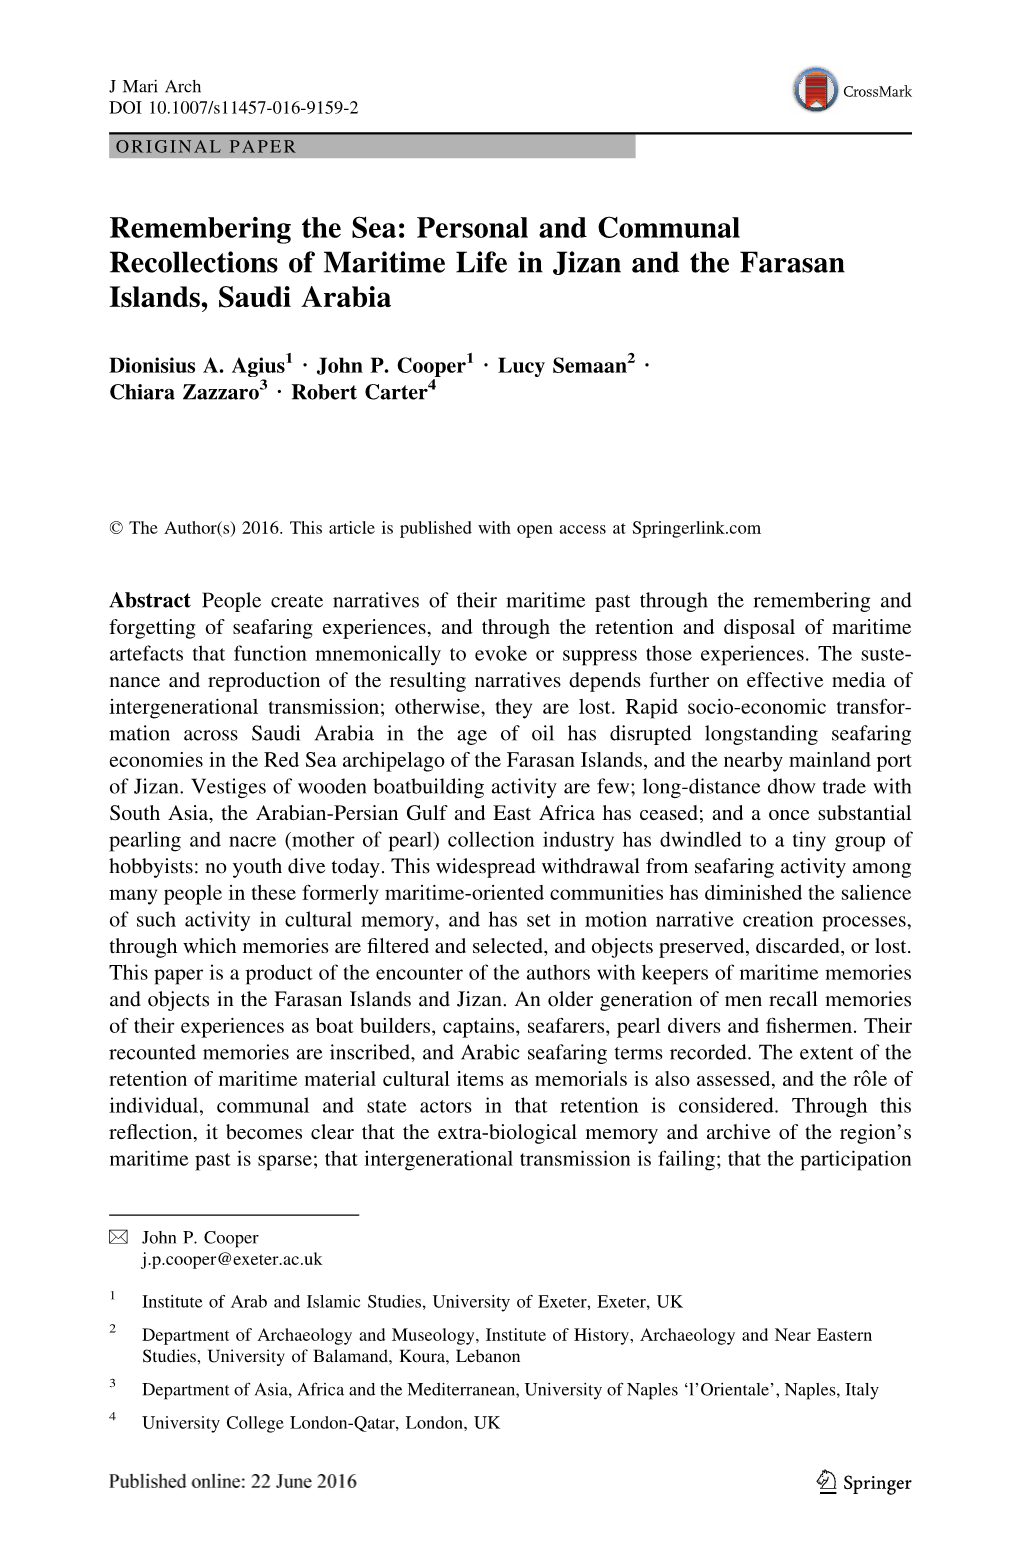 Personal and Communal Recollections of Maritime Life in Jizan and the Farasan Islands, Saudi Arabia